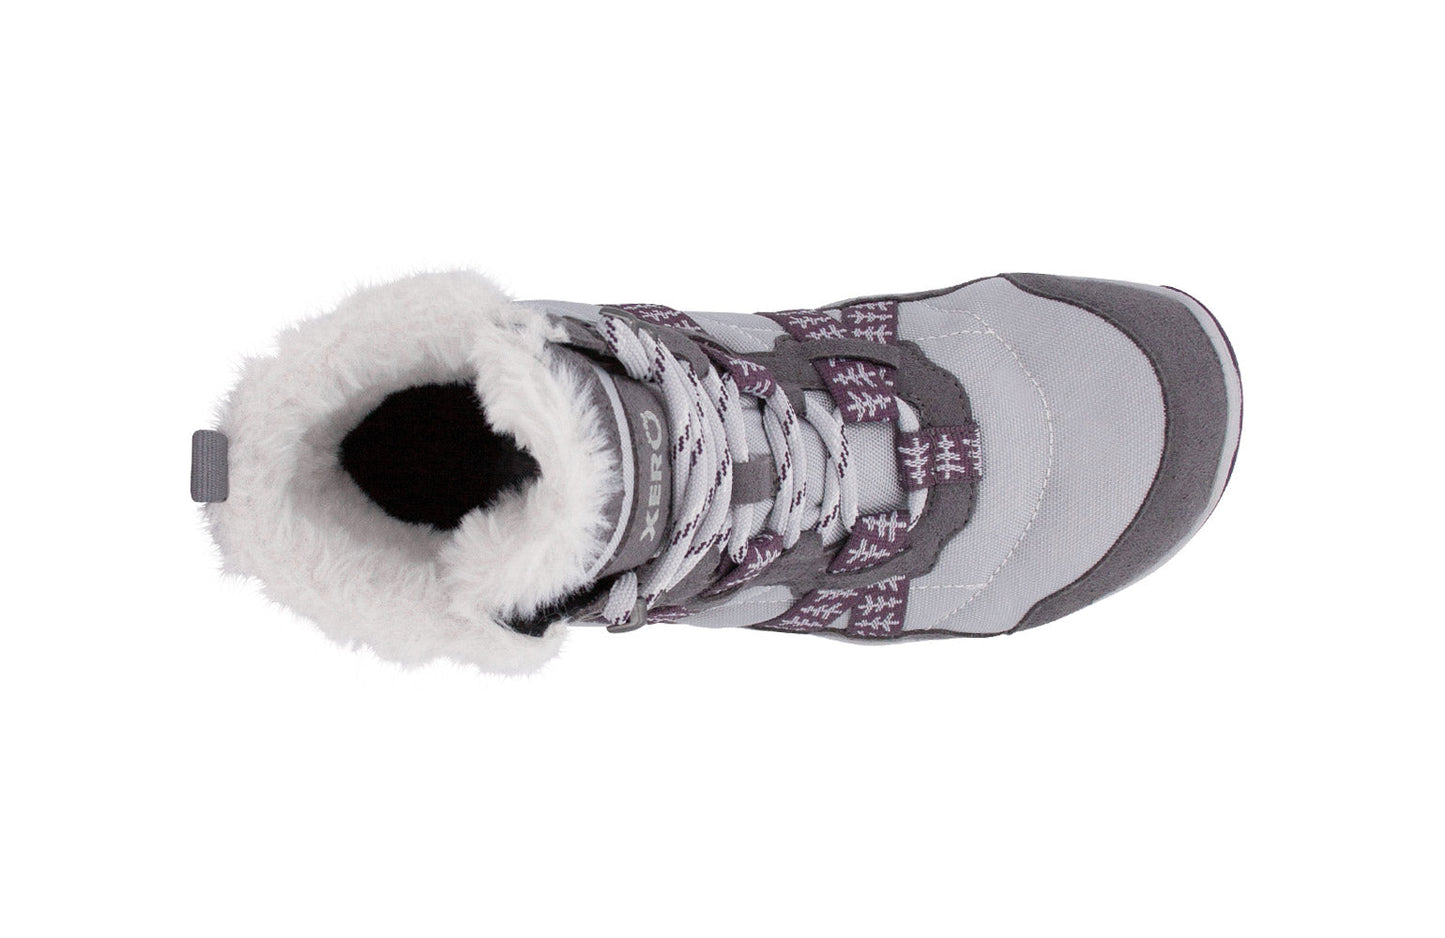 Xero Shoes Alpine Womens barfods vinterstøvler til kvinder i farven frost, top